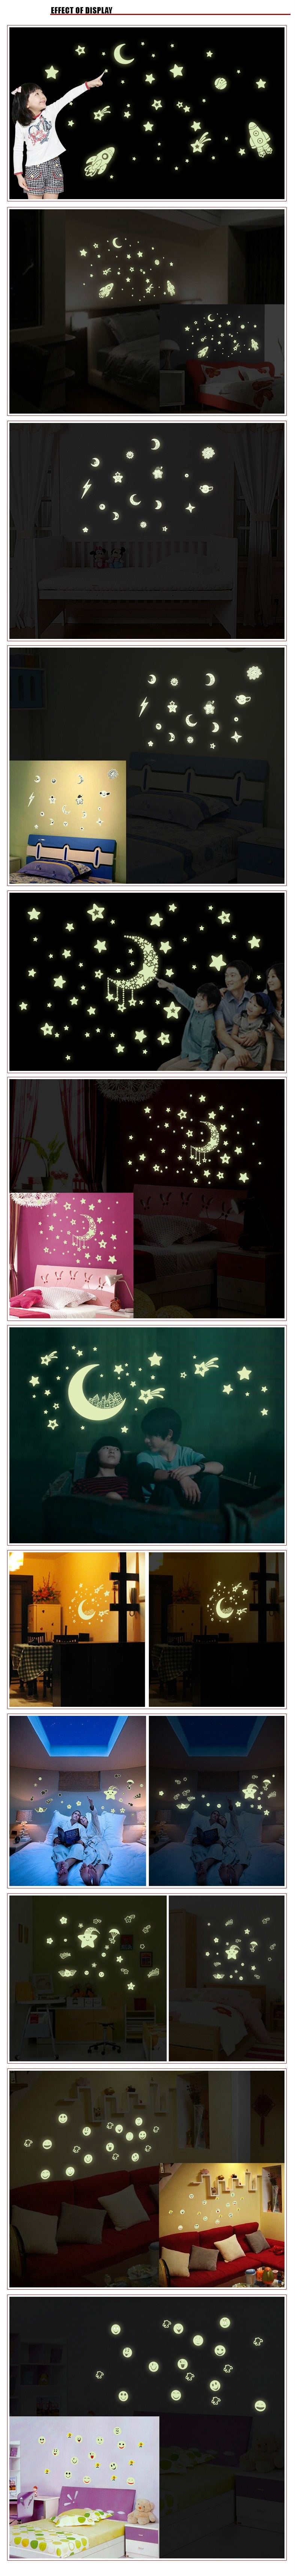 Hot Sale Various Amazing Glow in Dark Luminous Cartoon Moon Star Nursery Baby Room Home Decor Wall S